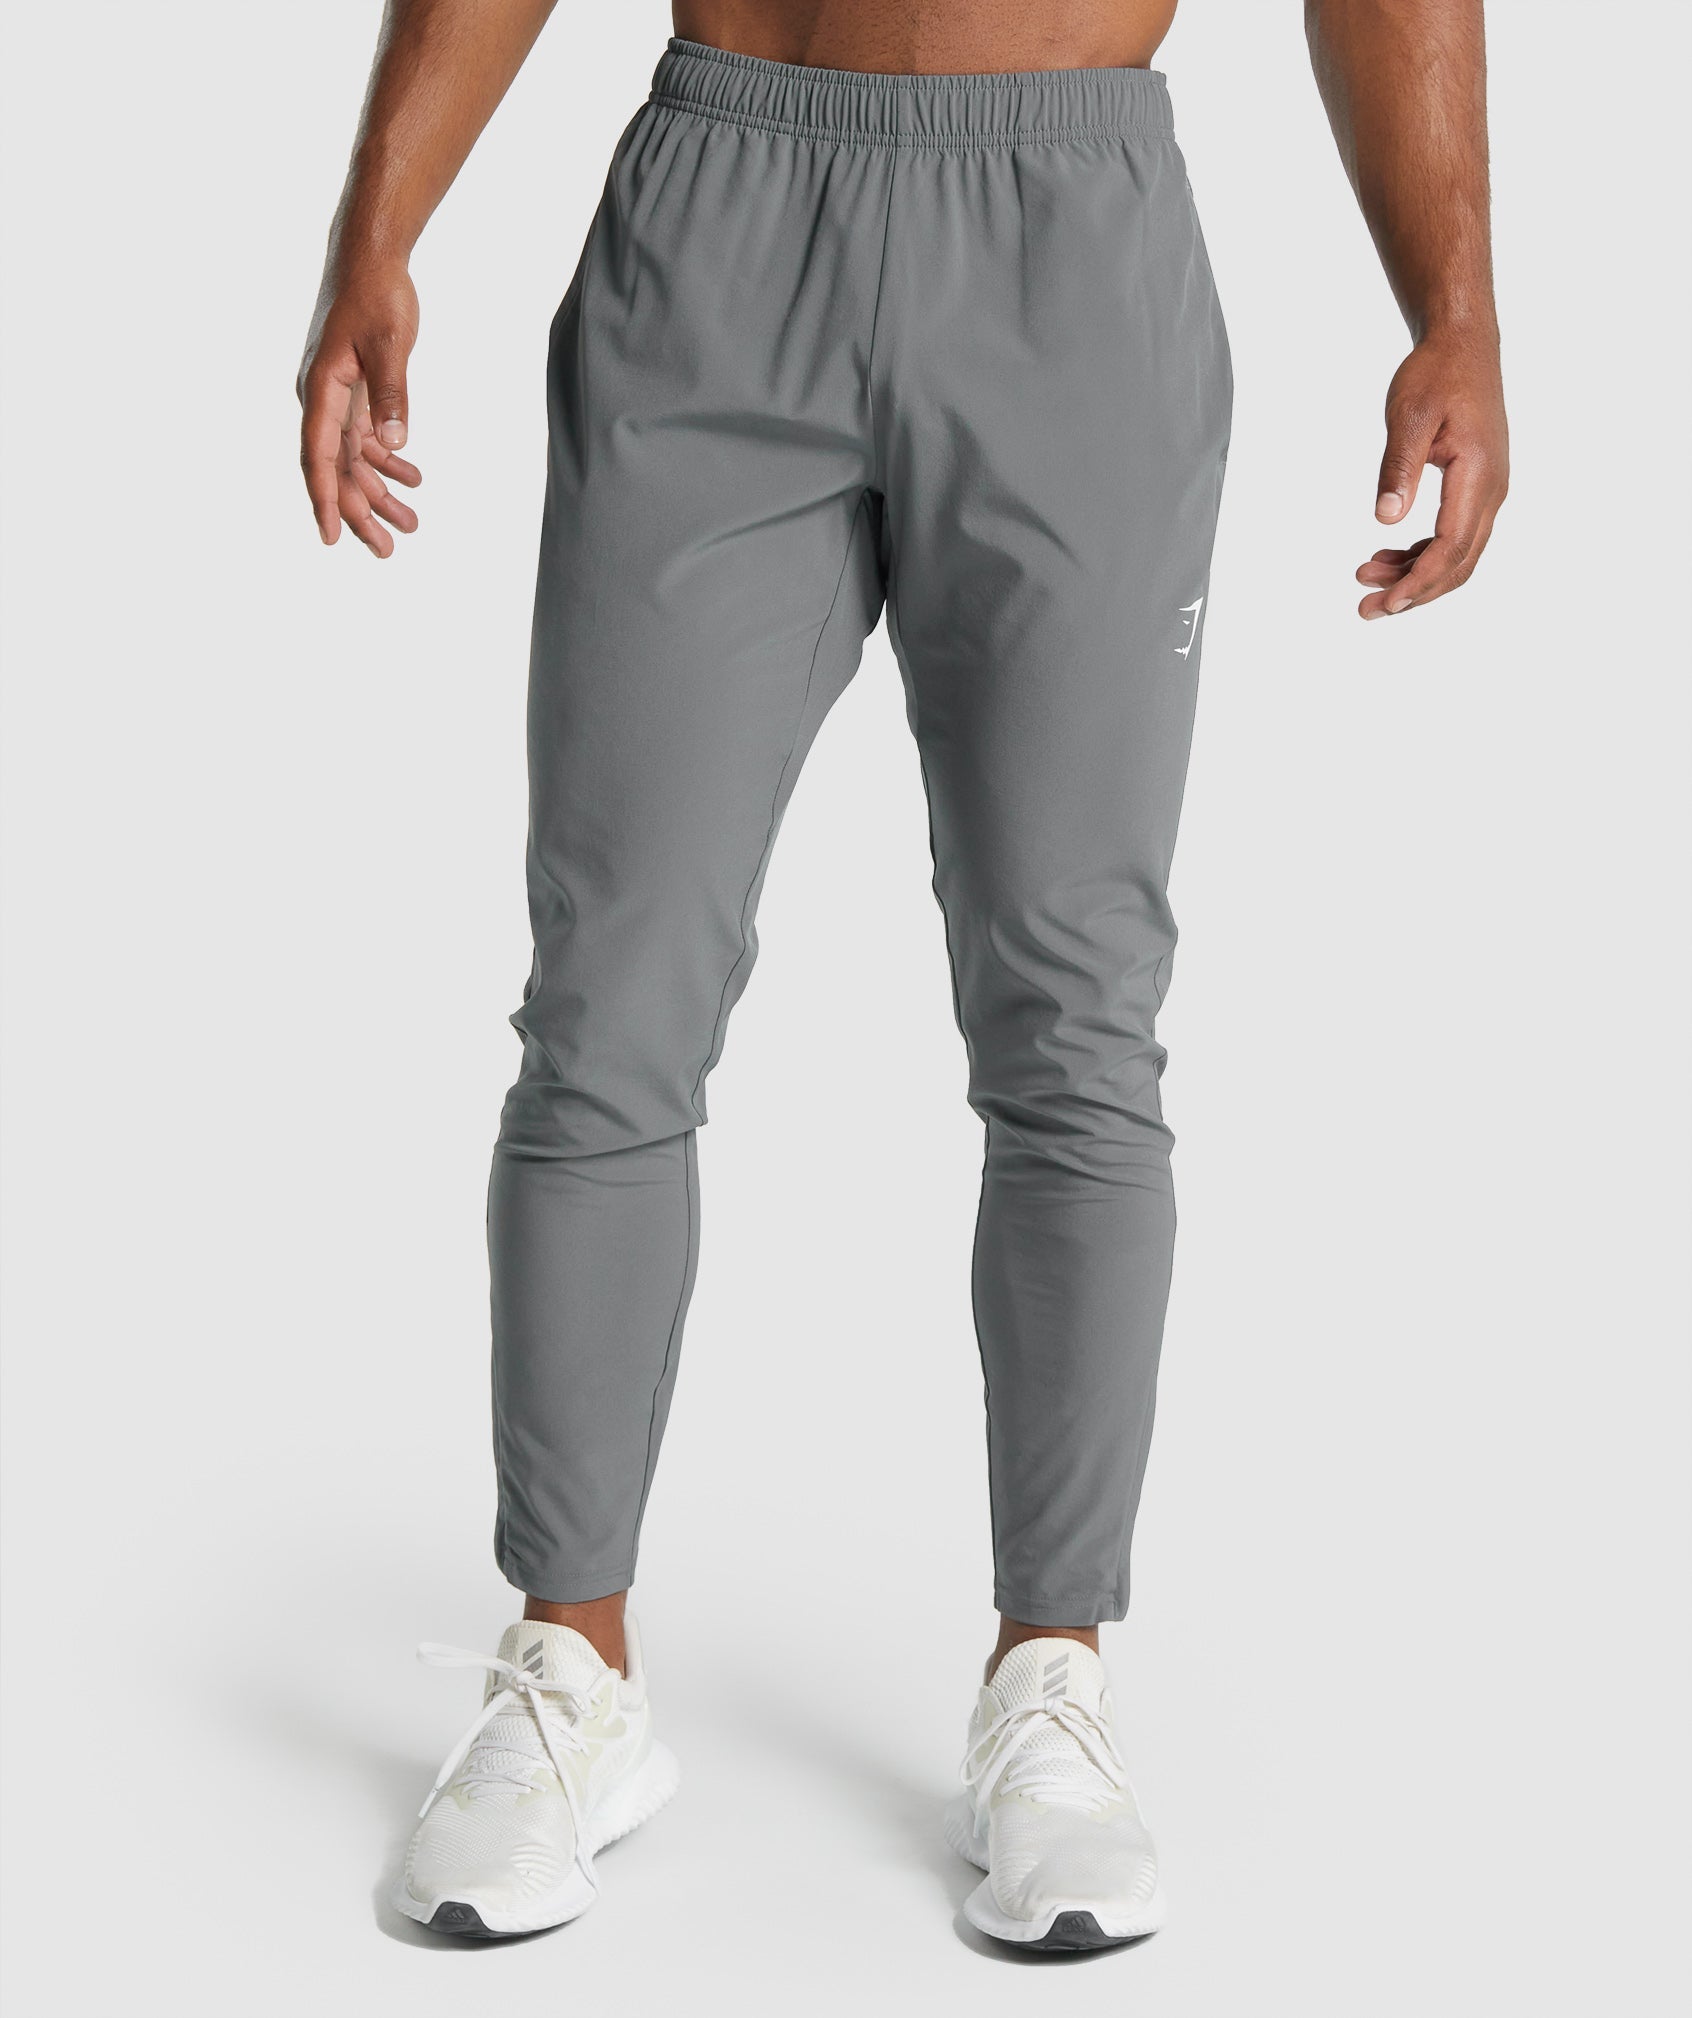 Men Joggers Tracktie Bottoms Fleece Sweat Pants Gym Sport Fitness Trousers